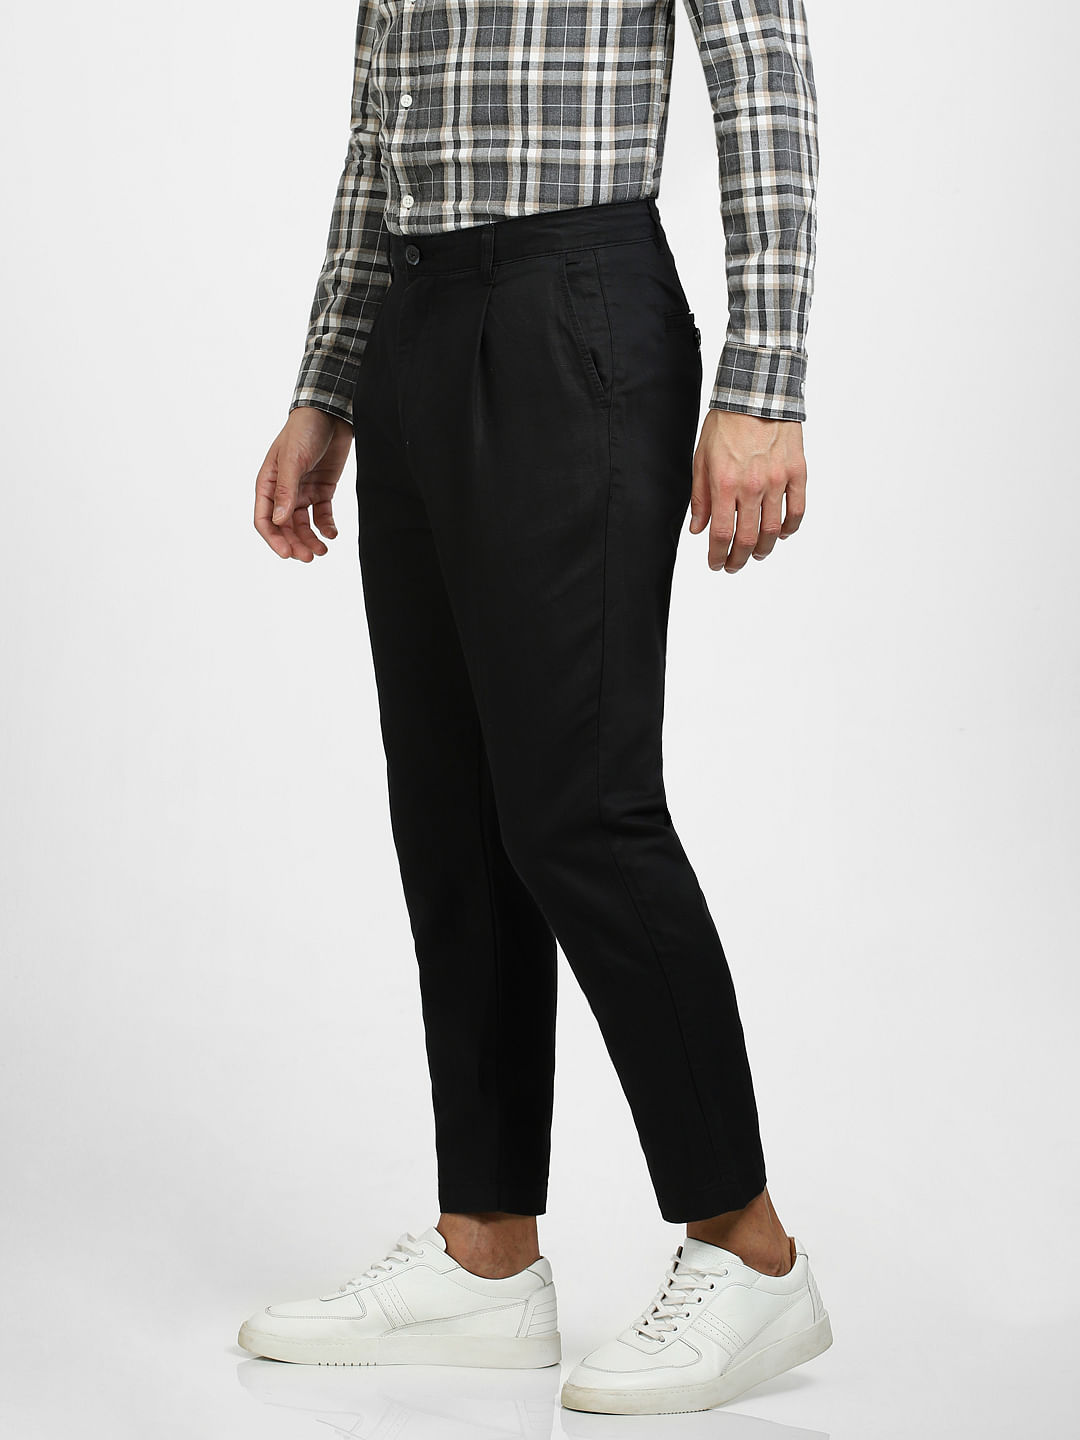 Women Formal Trouser: Buy Brown Cotton Formal Trouser Online - Cliths